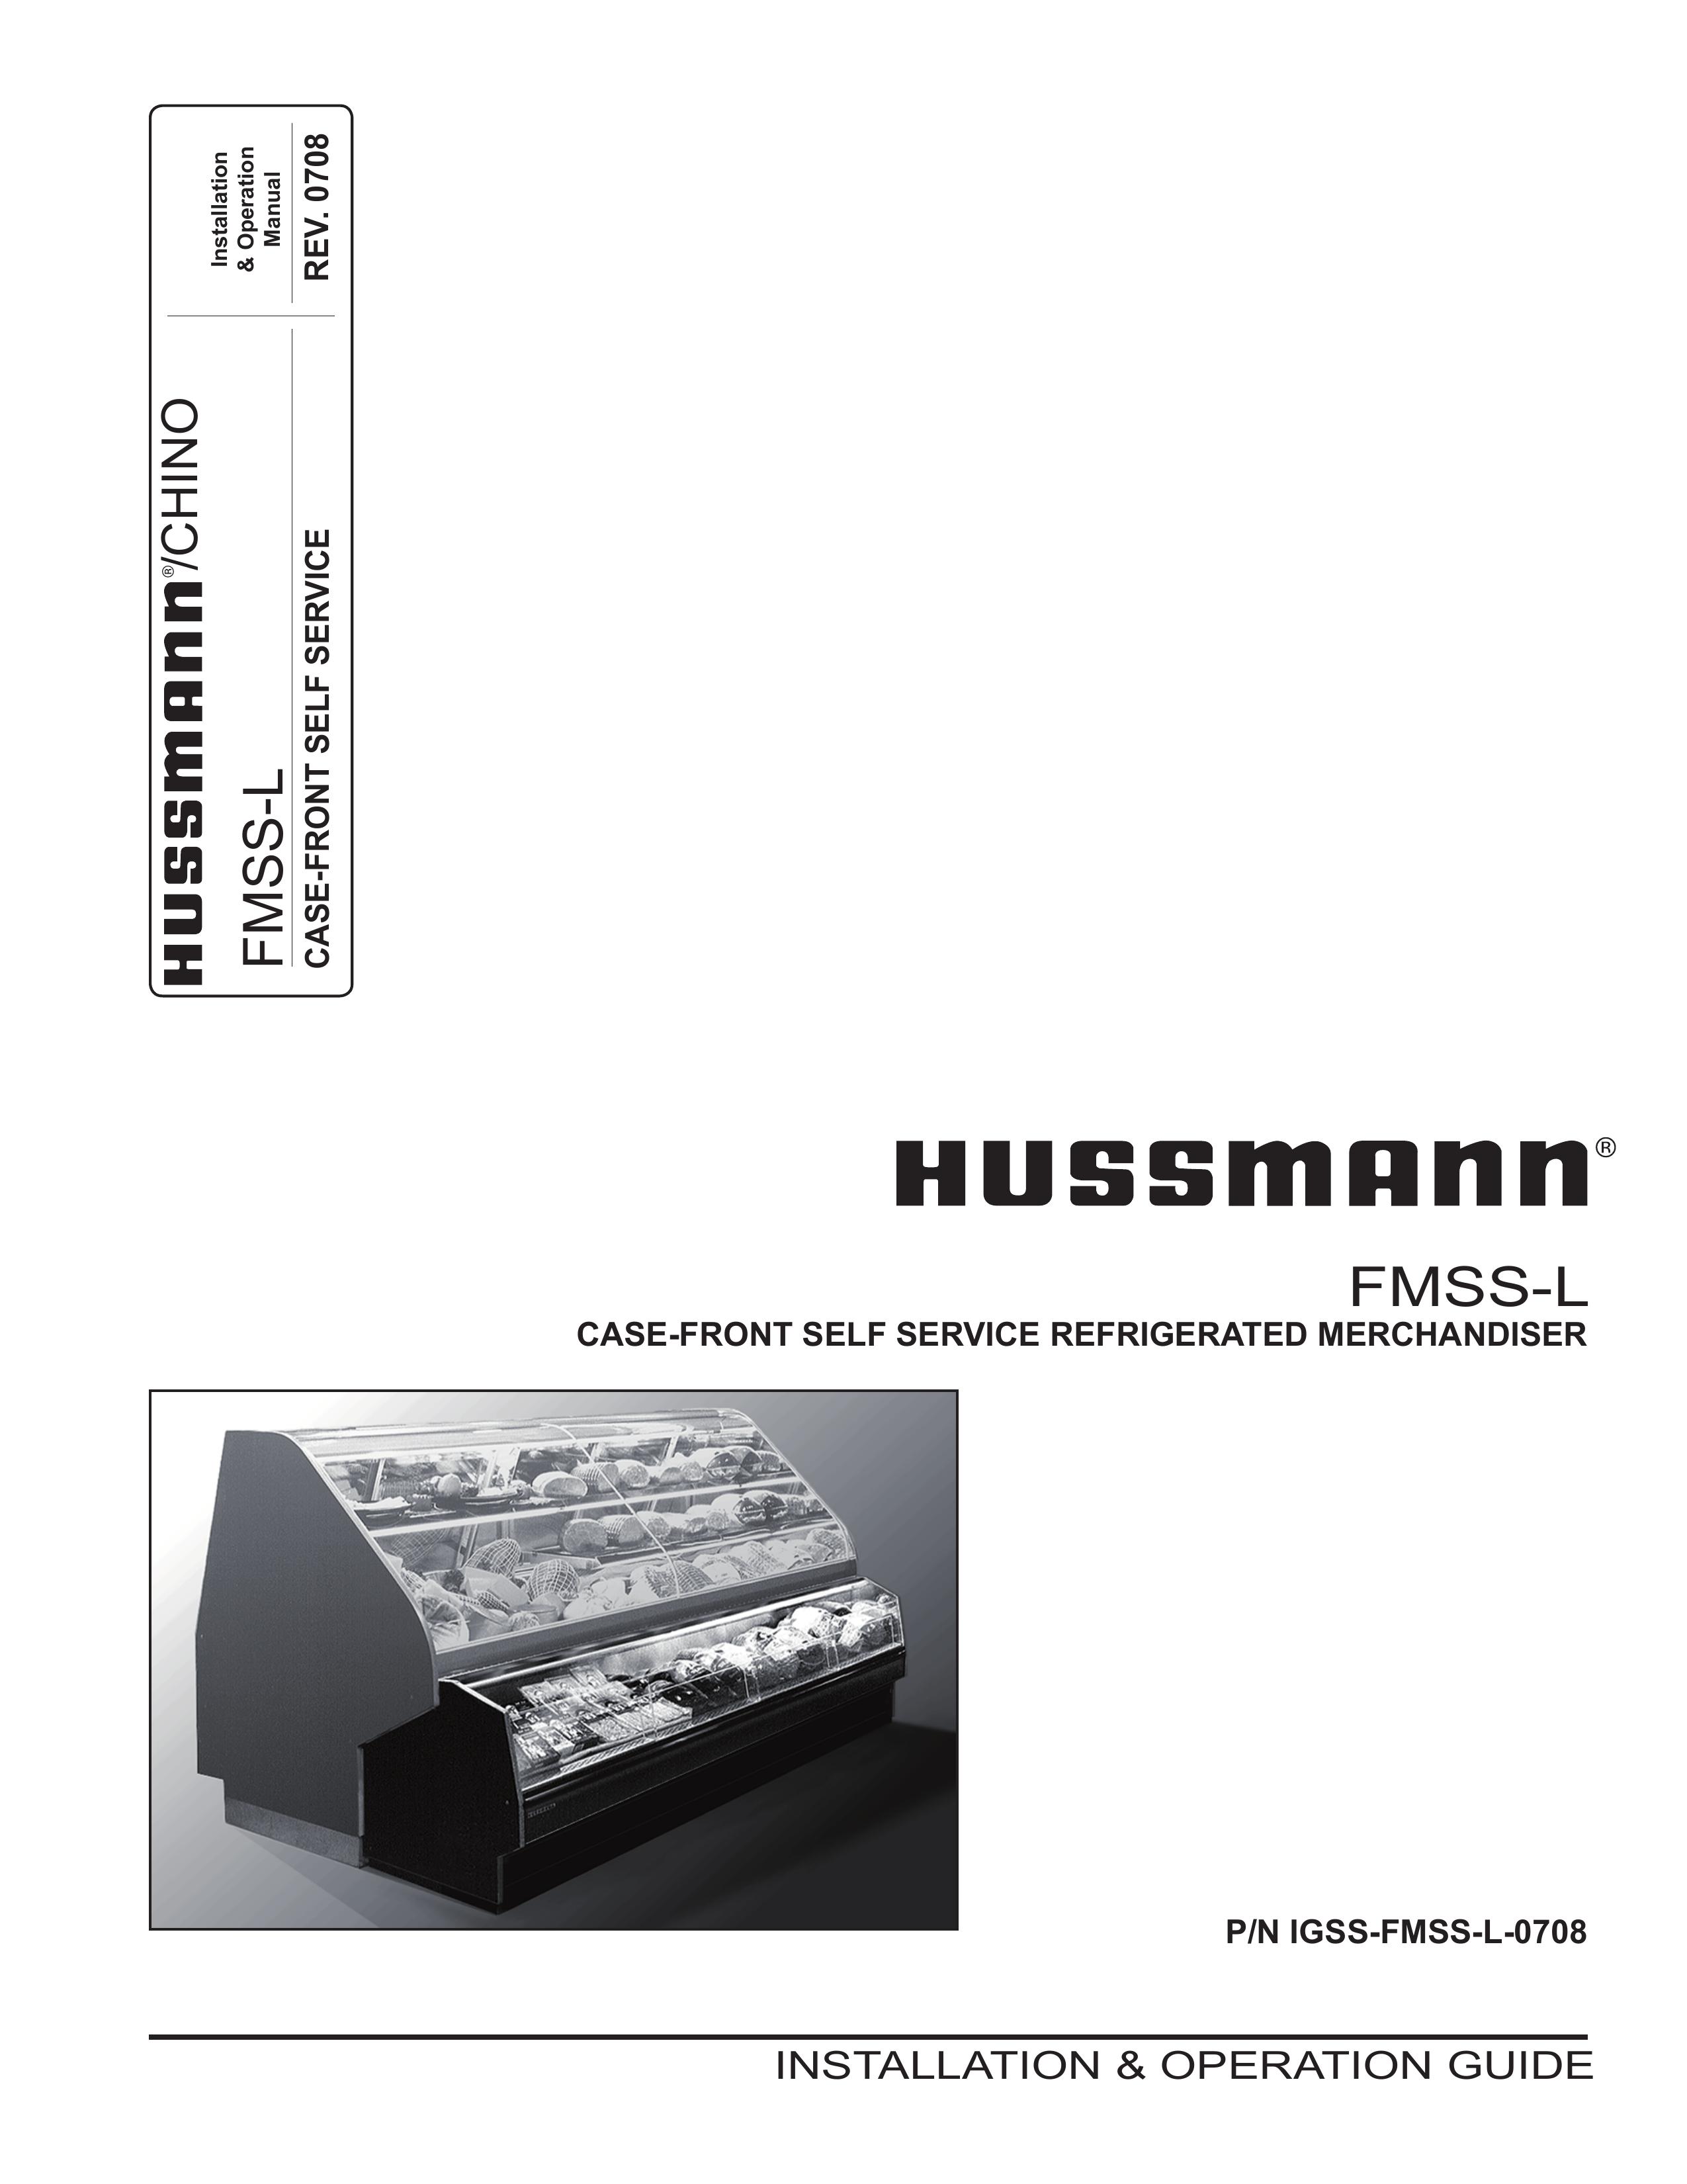 hussman FMSS-L Refrigerator User Manual